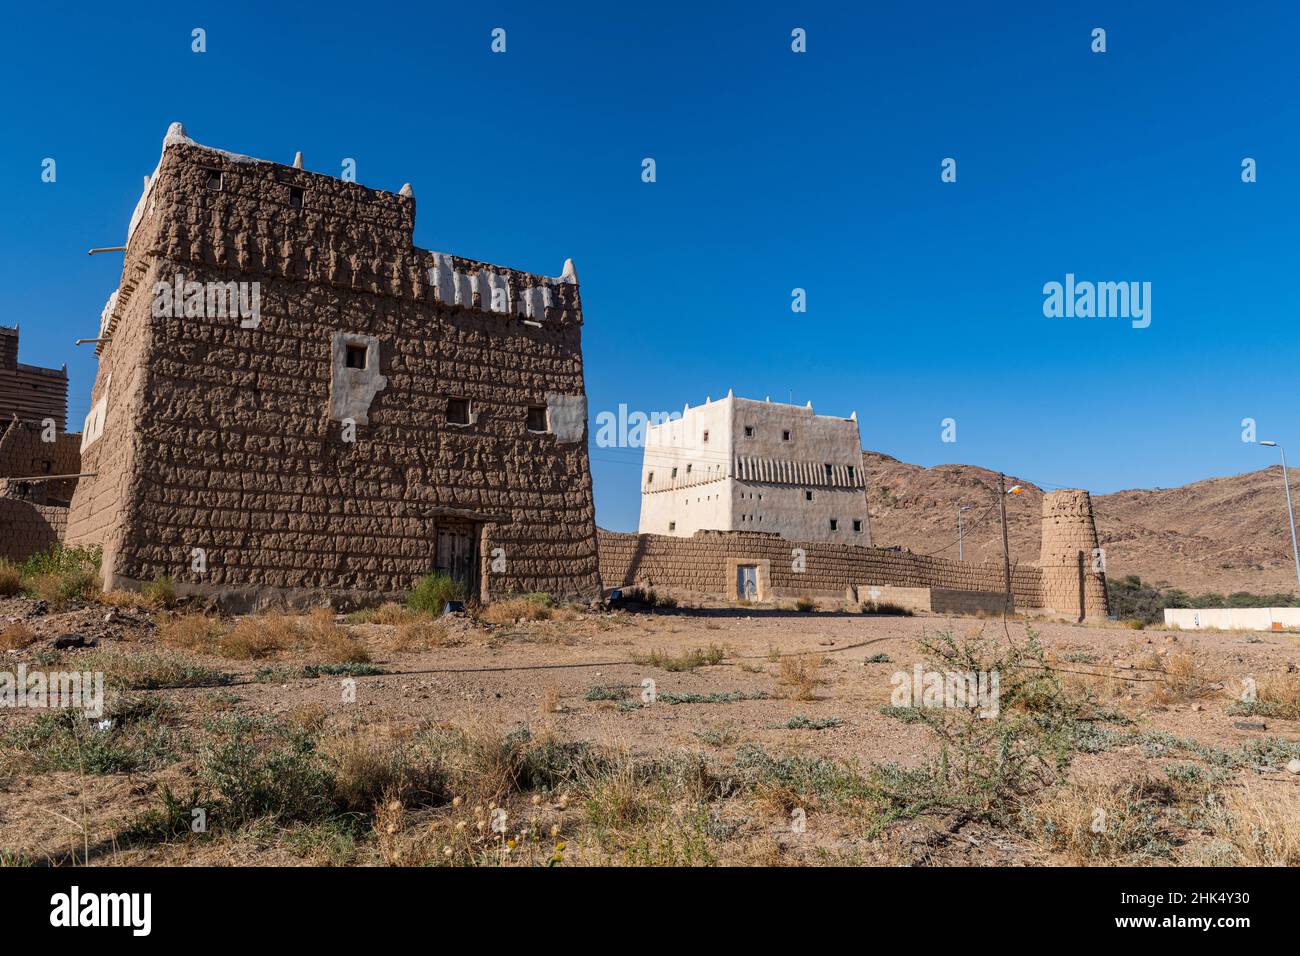 Typical fortified houses, Abha region, Kingdom of Saudi Arabia, Middle East Stock Photo